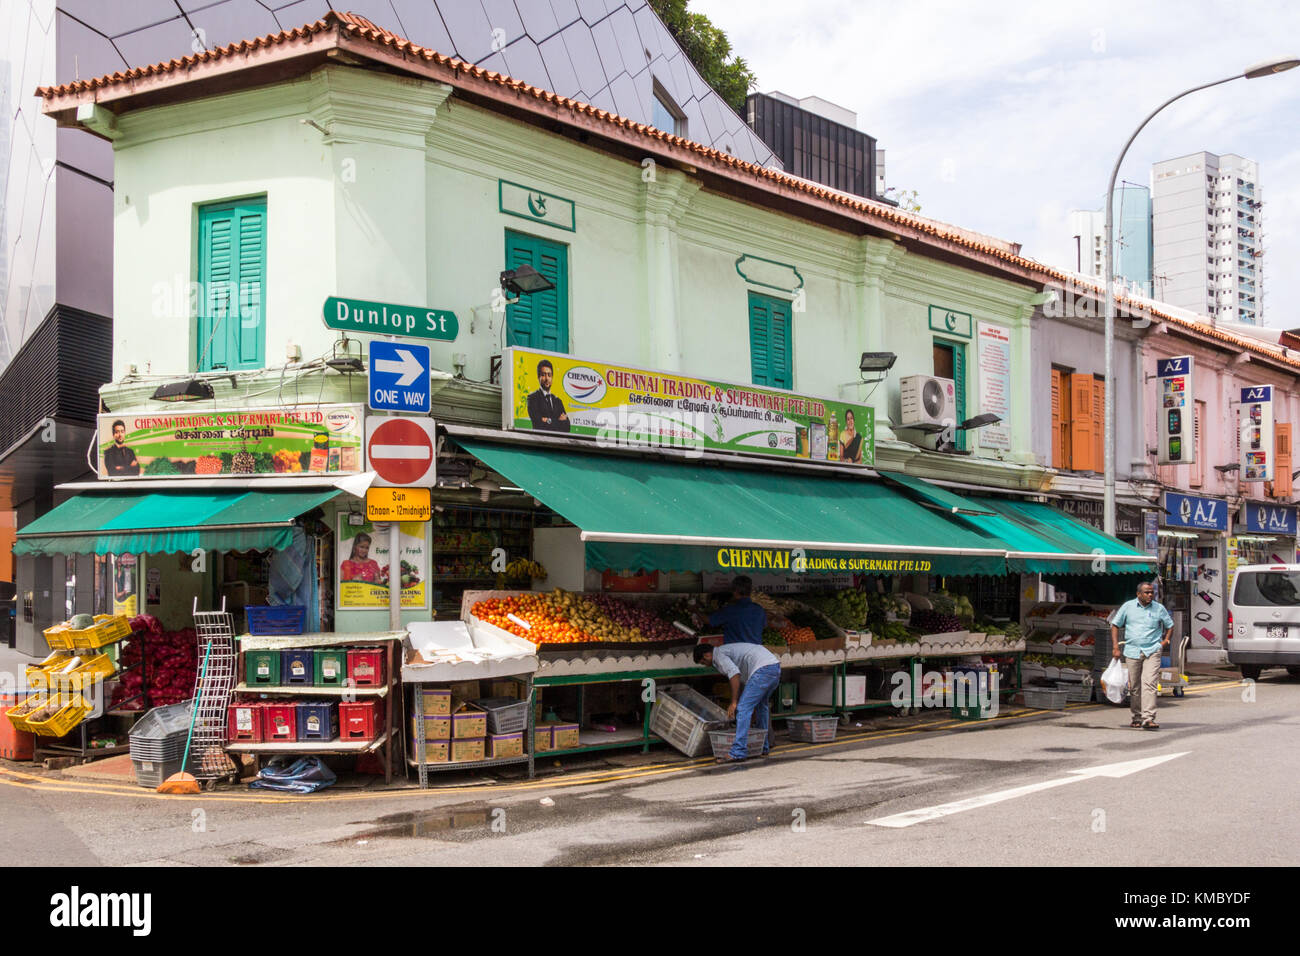 La frutta e la verdura shop, Dunlop Street, Little India, Singapore Foto Stock